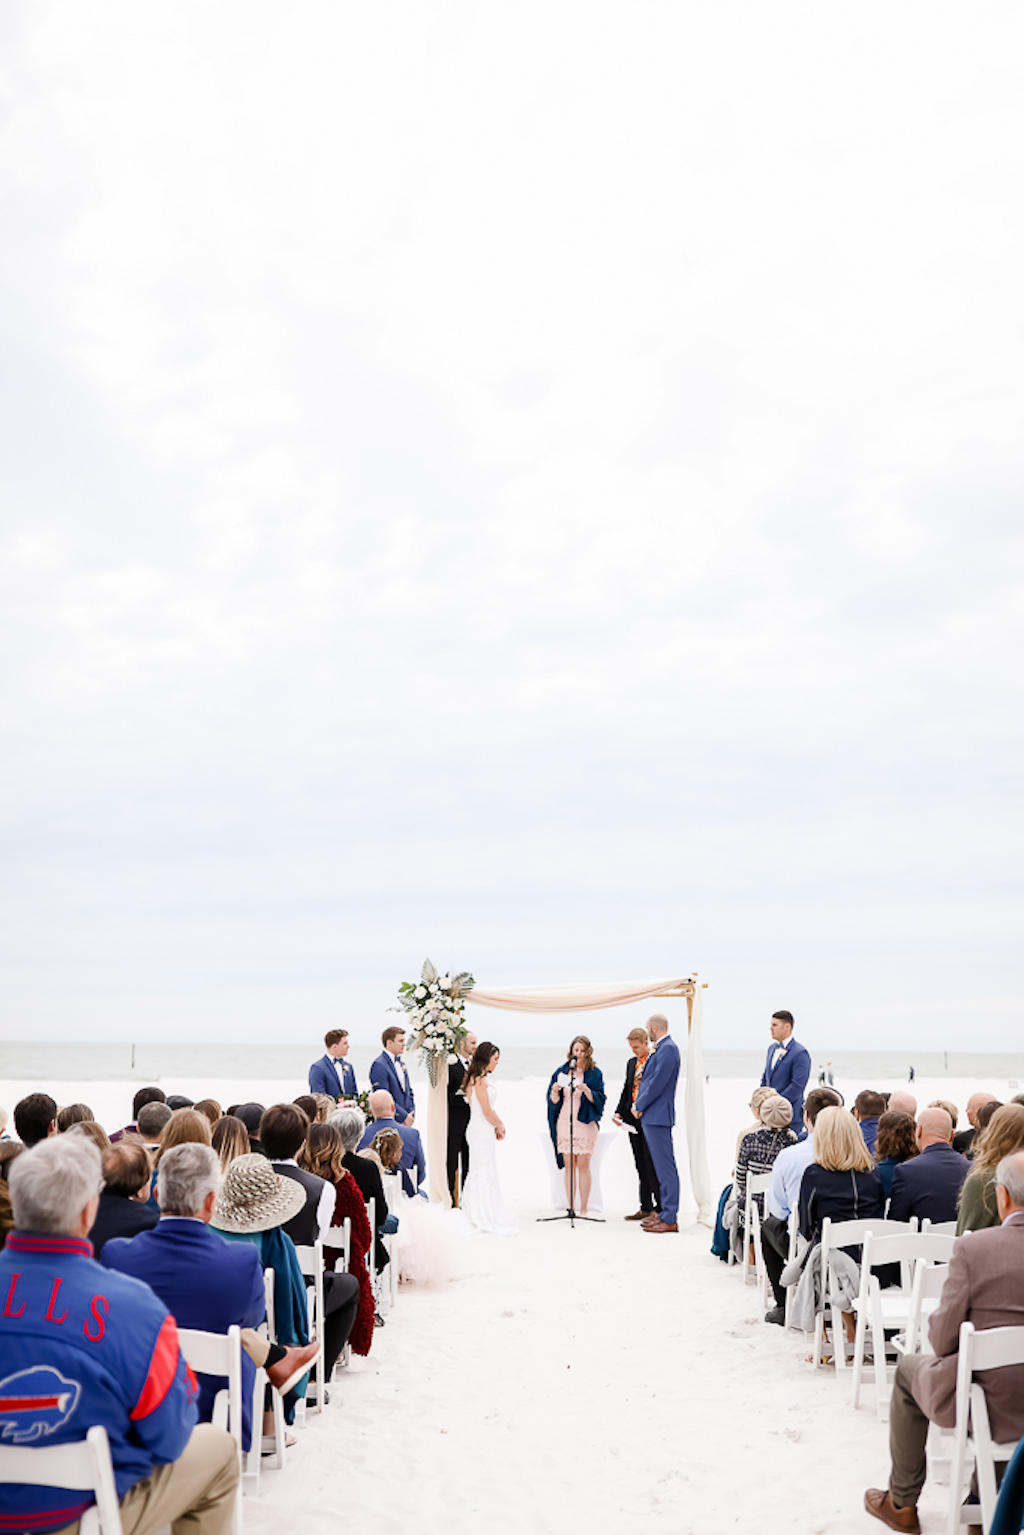 Bride and Groom Destination Florida Wedding Ceremony Beachfront Portrait | Hotel Wedding Venue The Hilton Clearwater Beach Resort & Spa | Photographer Lifelong Photography Studios